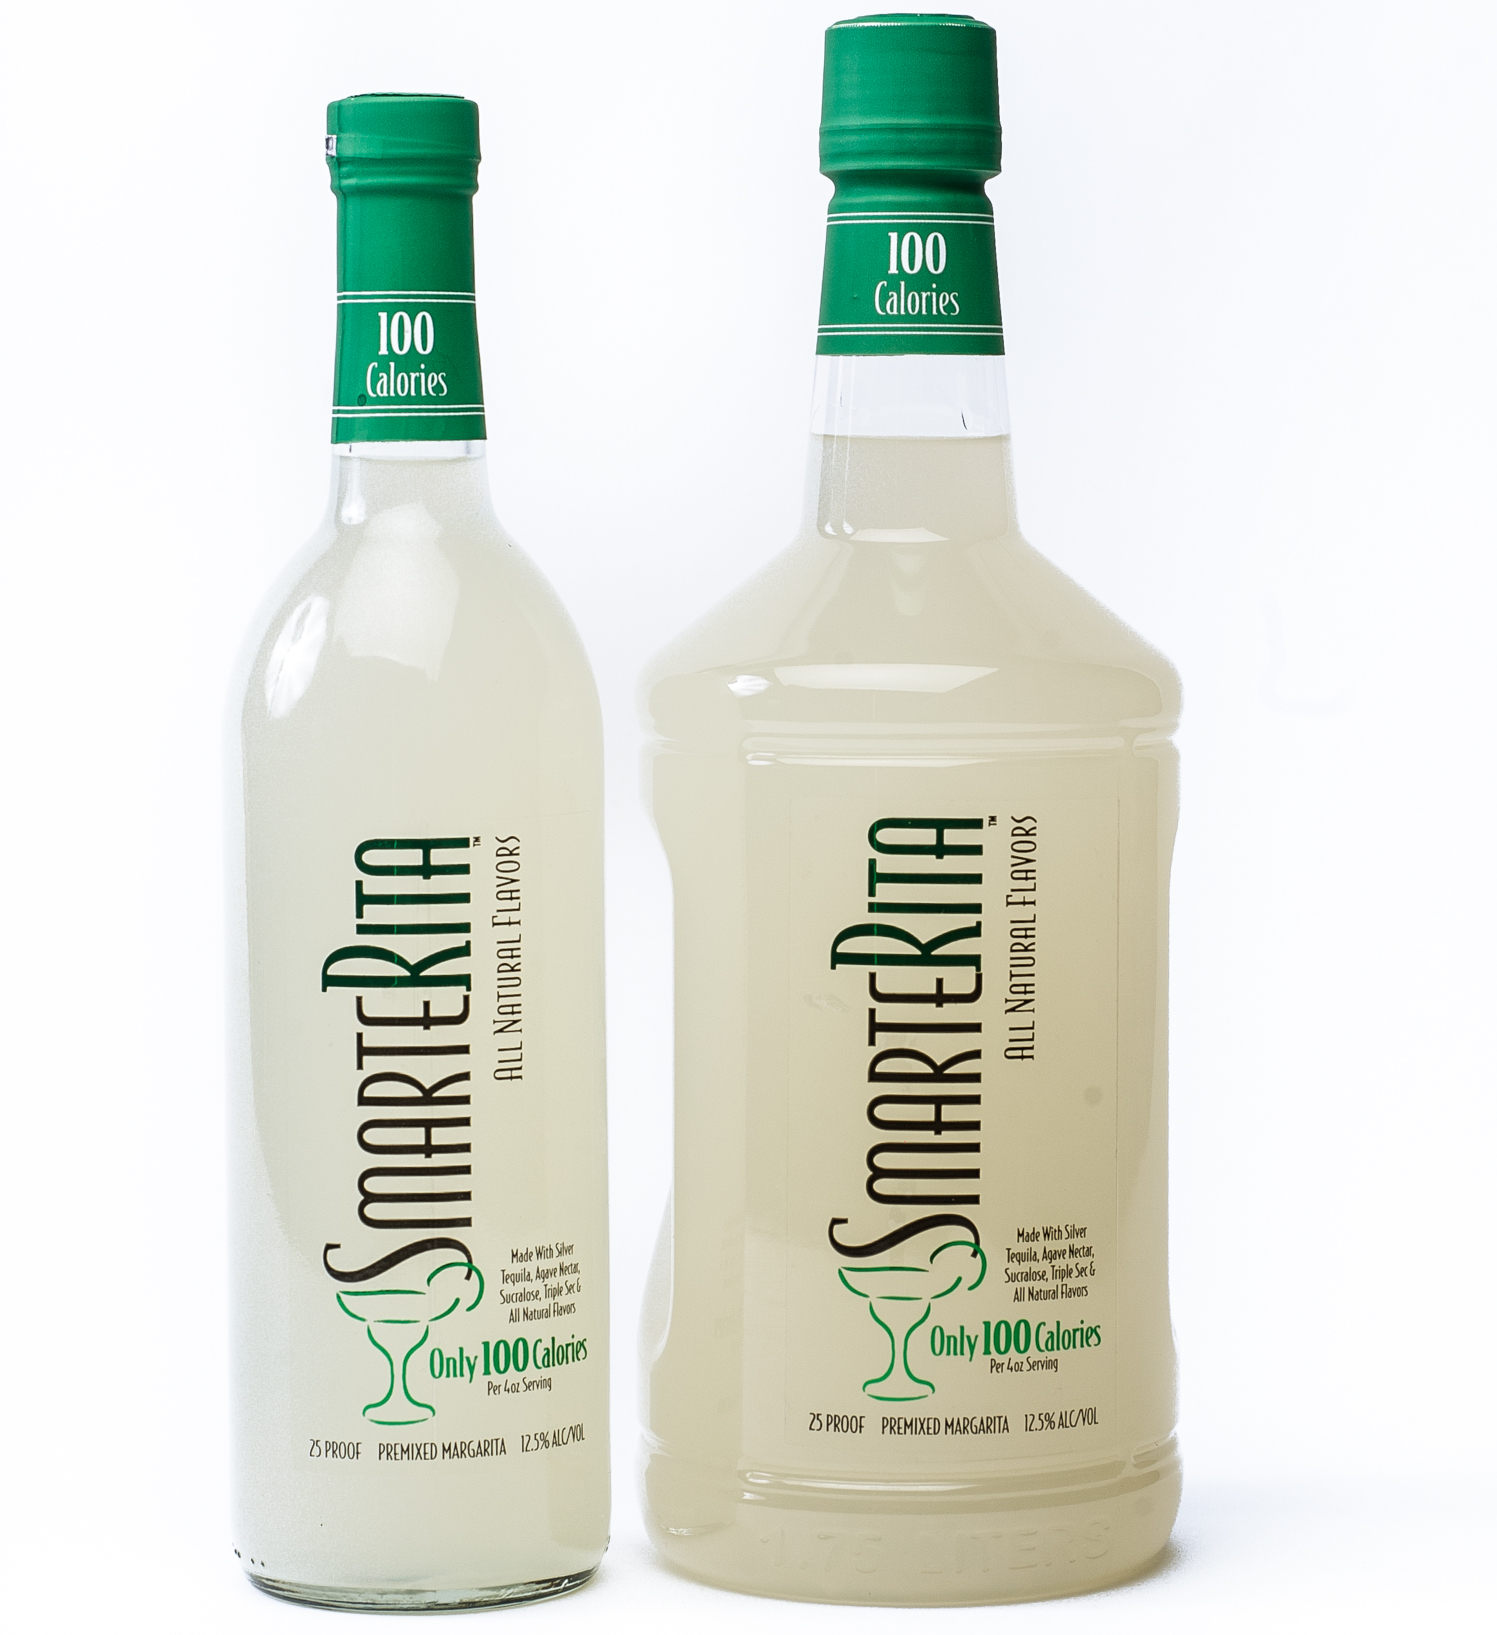 Smarterita premixed margarita beverage available in glass or PET packaging.